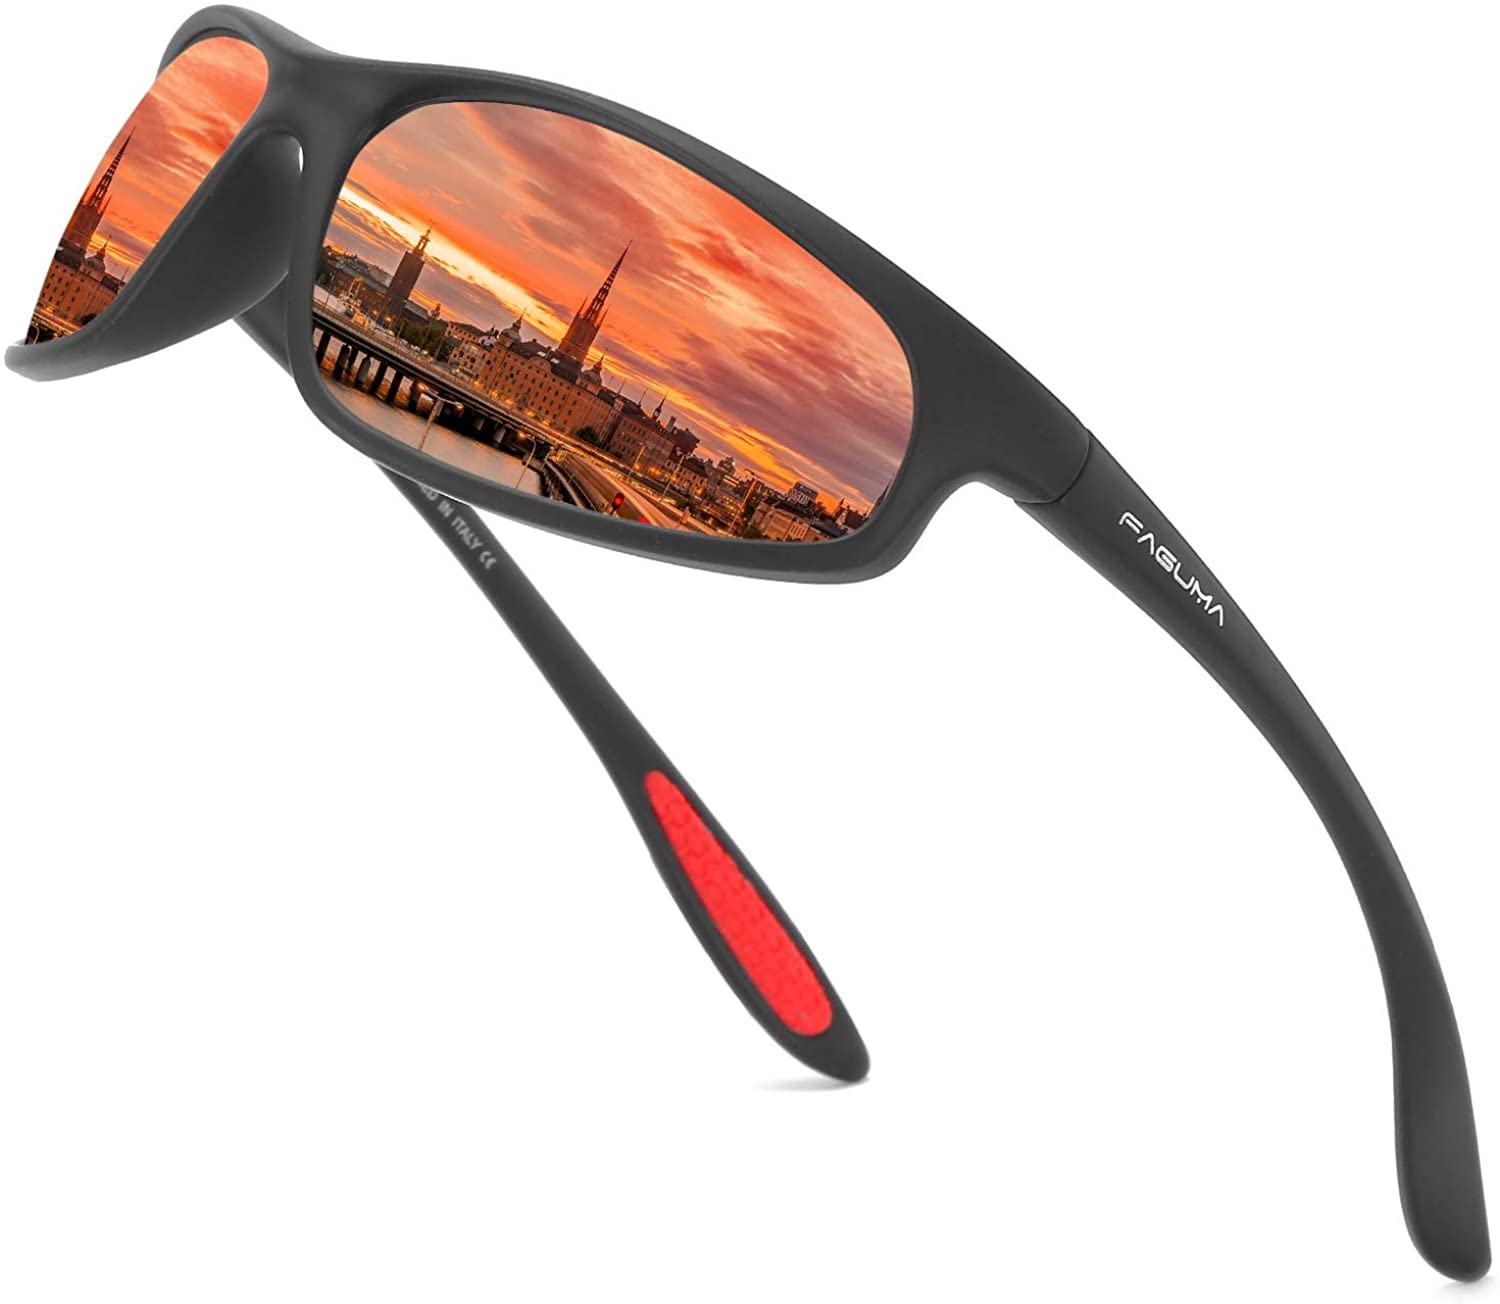 Flying Fisherman Buoy Jr Angler Polarized Sunglasses with AcuTint UV Blocker for Fishing and Outdoor Sports 